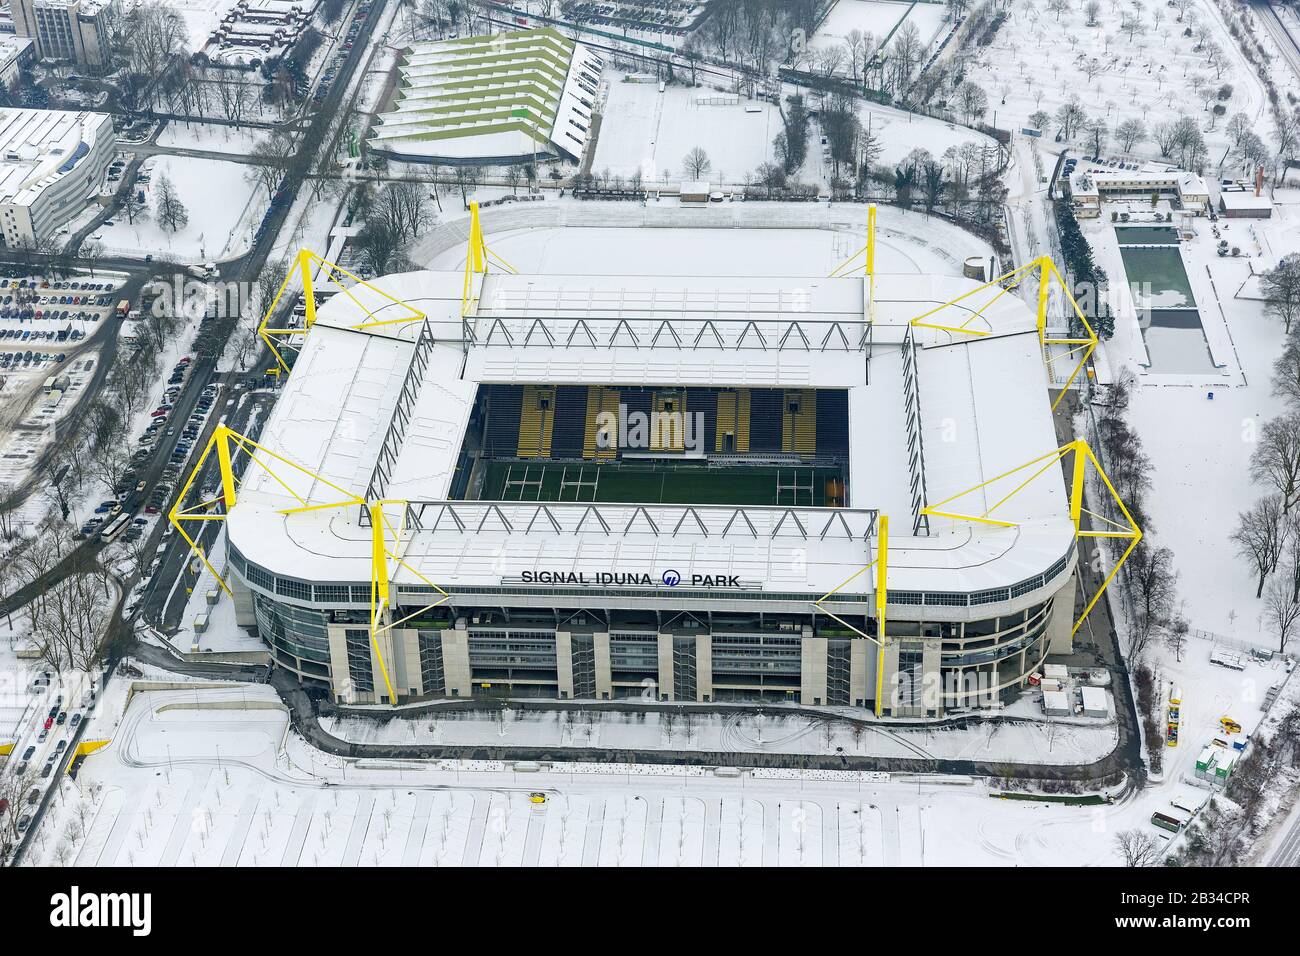 snow-covered soccer stadium Westfalenstadion of Dortmund BVB, 19.01.2013, aerial view, Germany, North Rhine-Westphalia, Ruhr Area, Dortmund Stock Photo